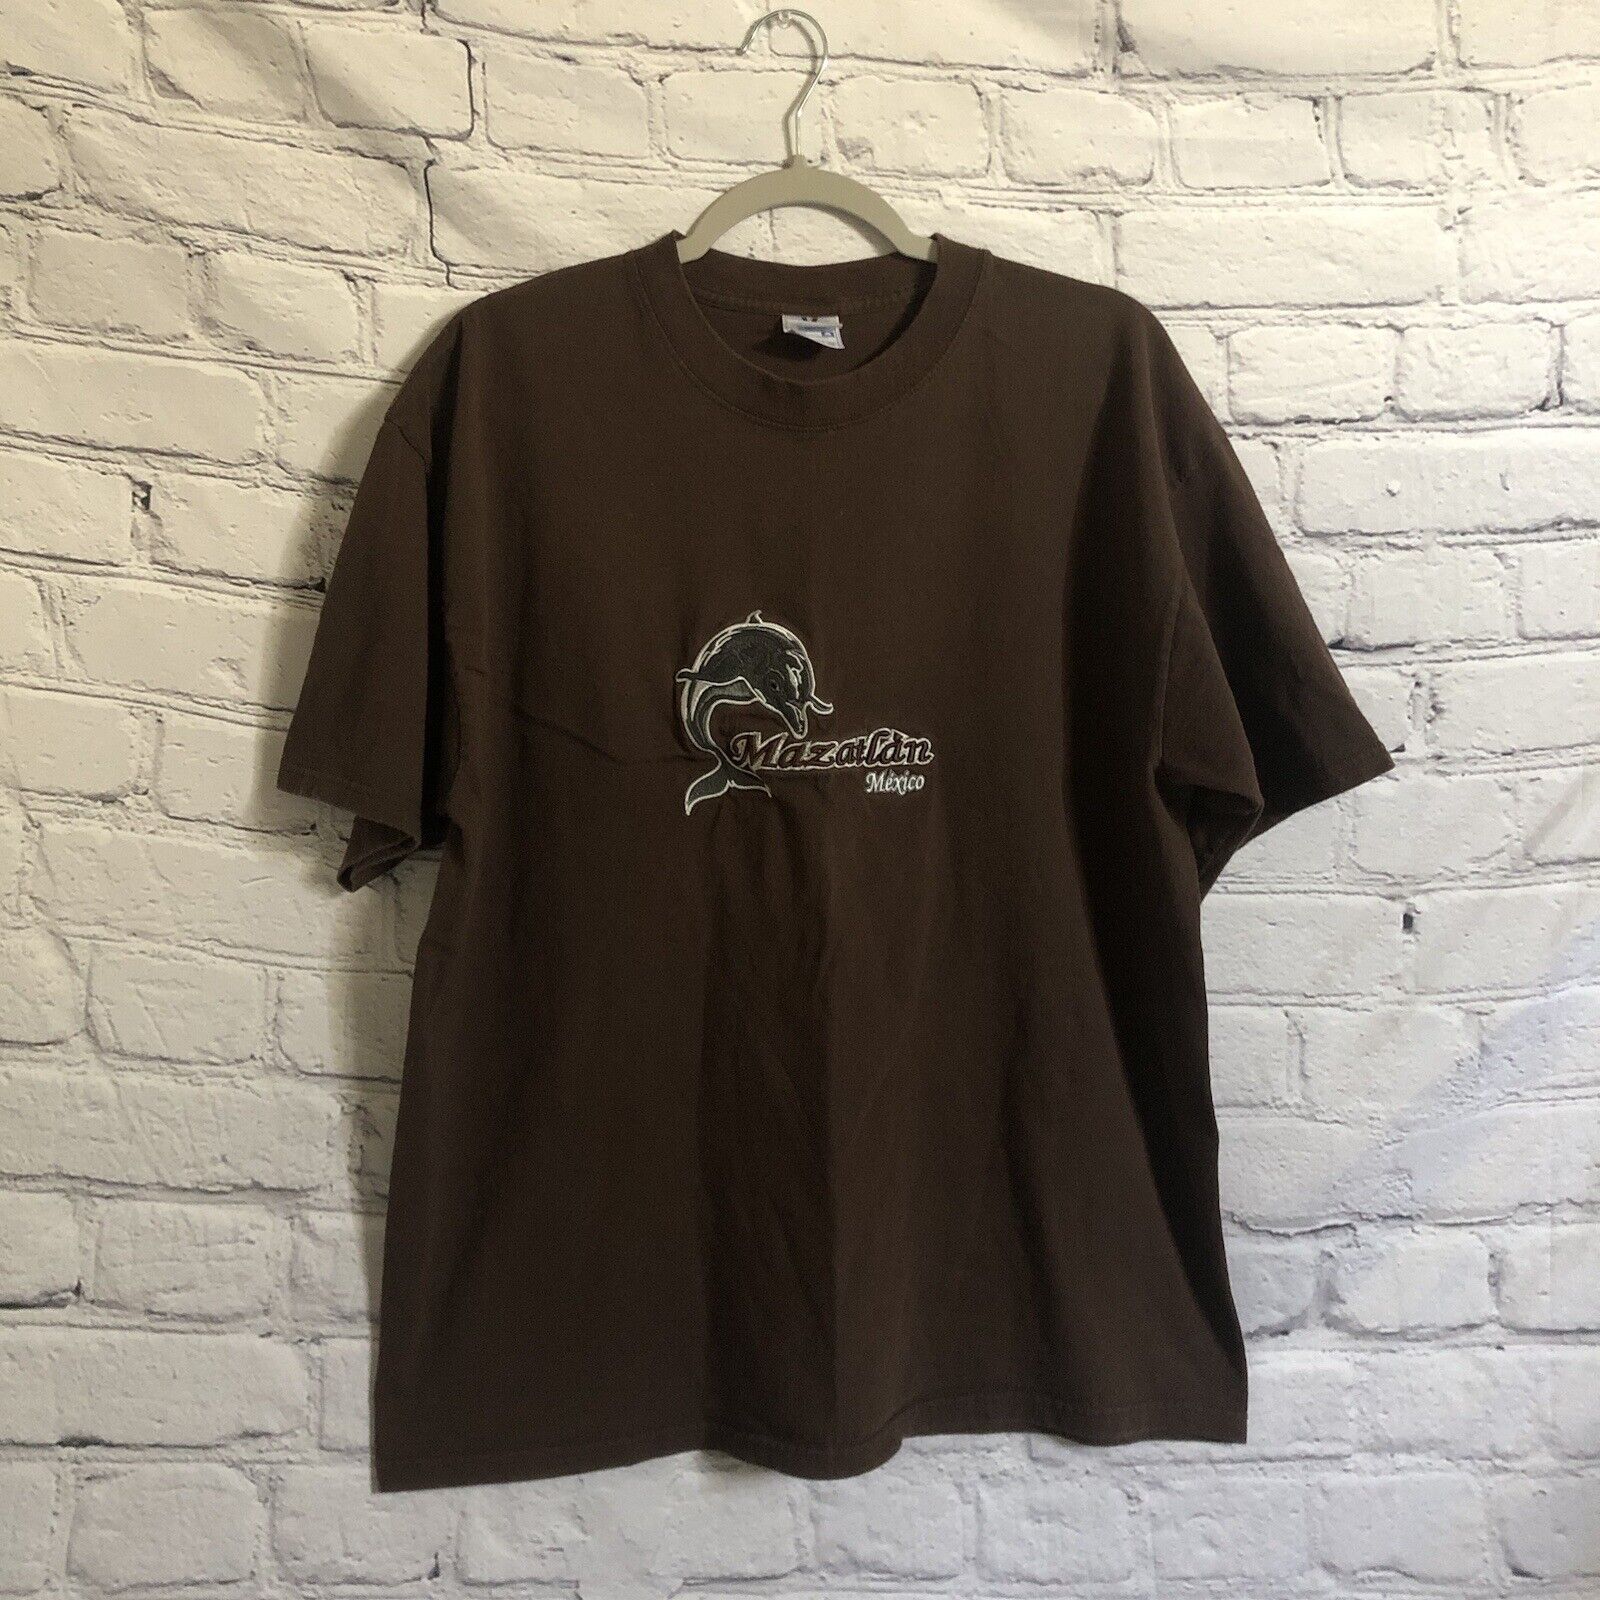 Mazatlan Mexico T-Shirt Brown Gray Dolphin Size XL - image 1